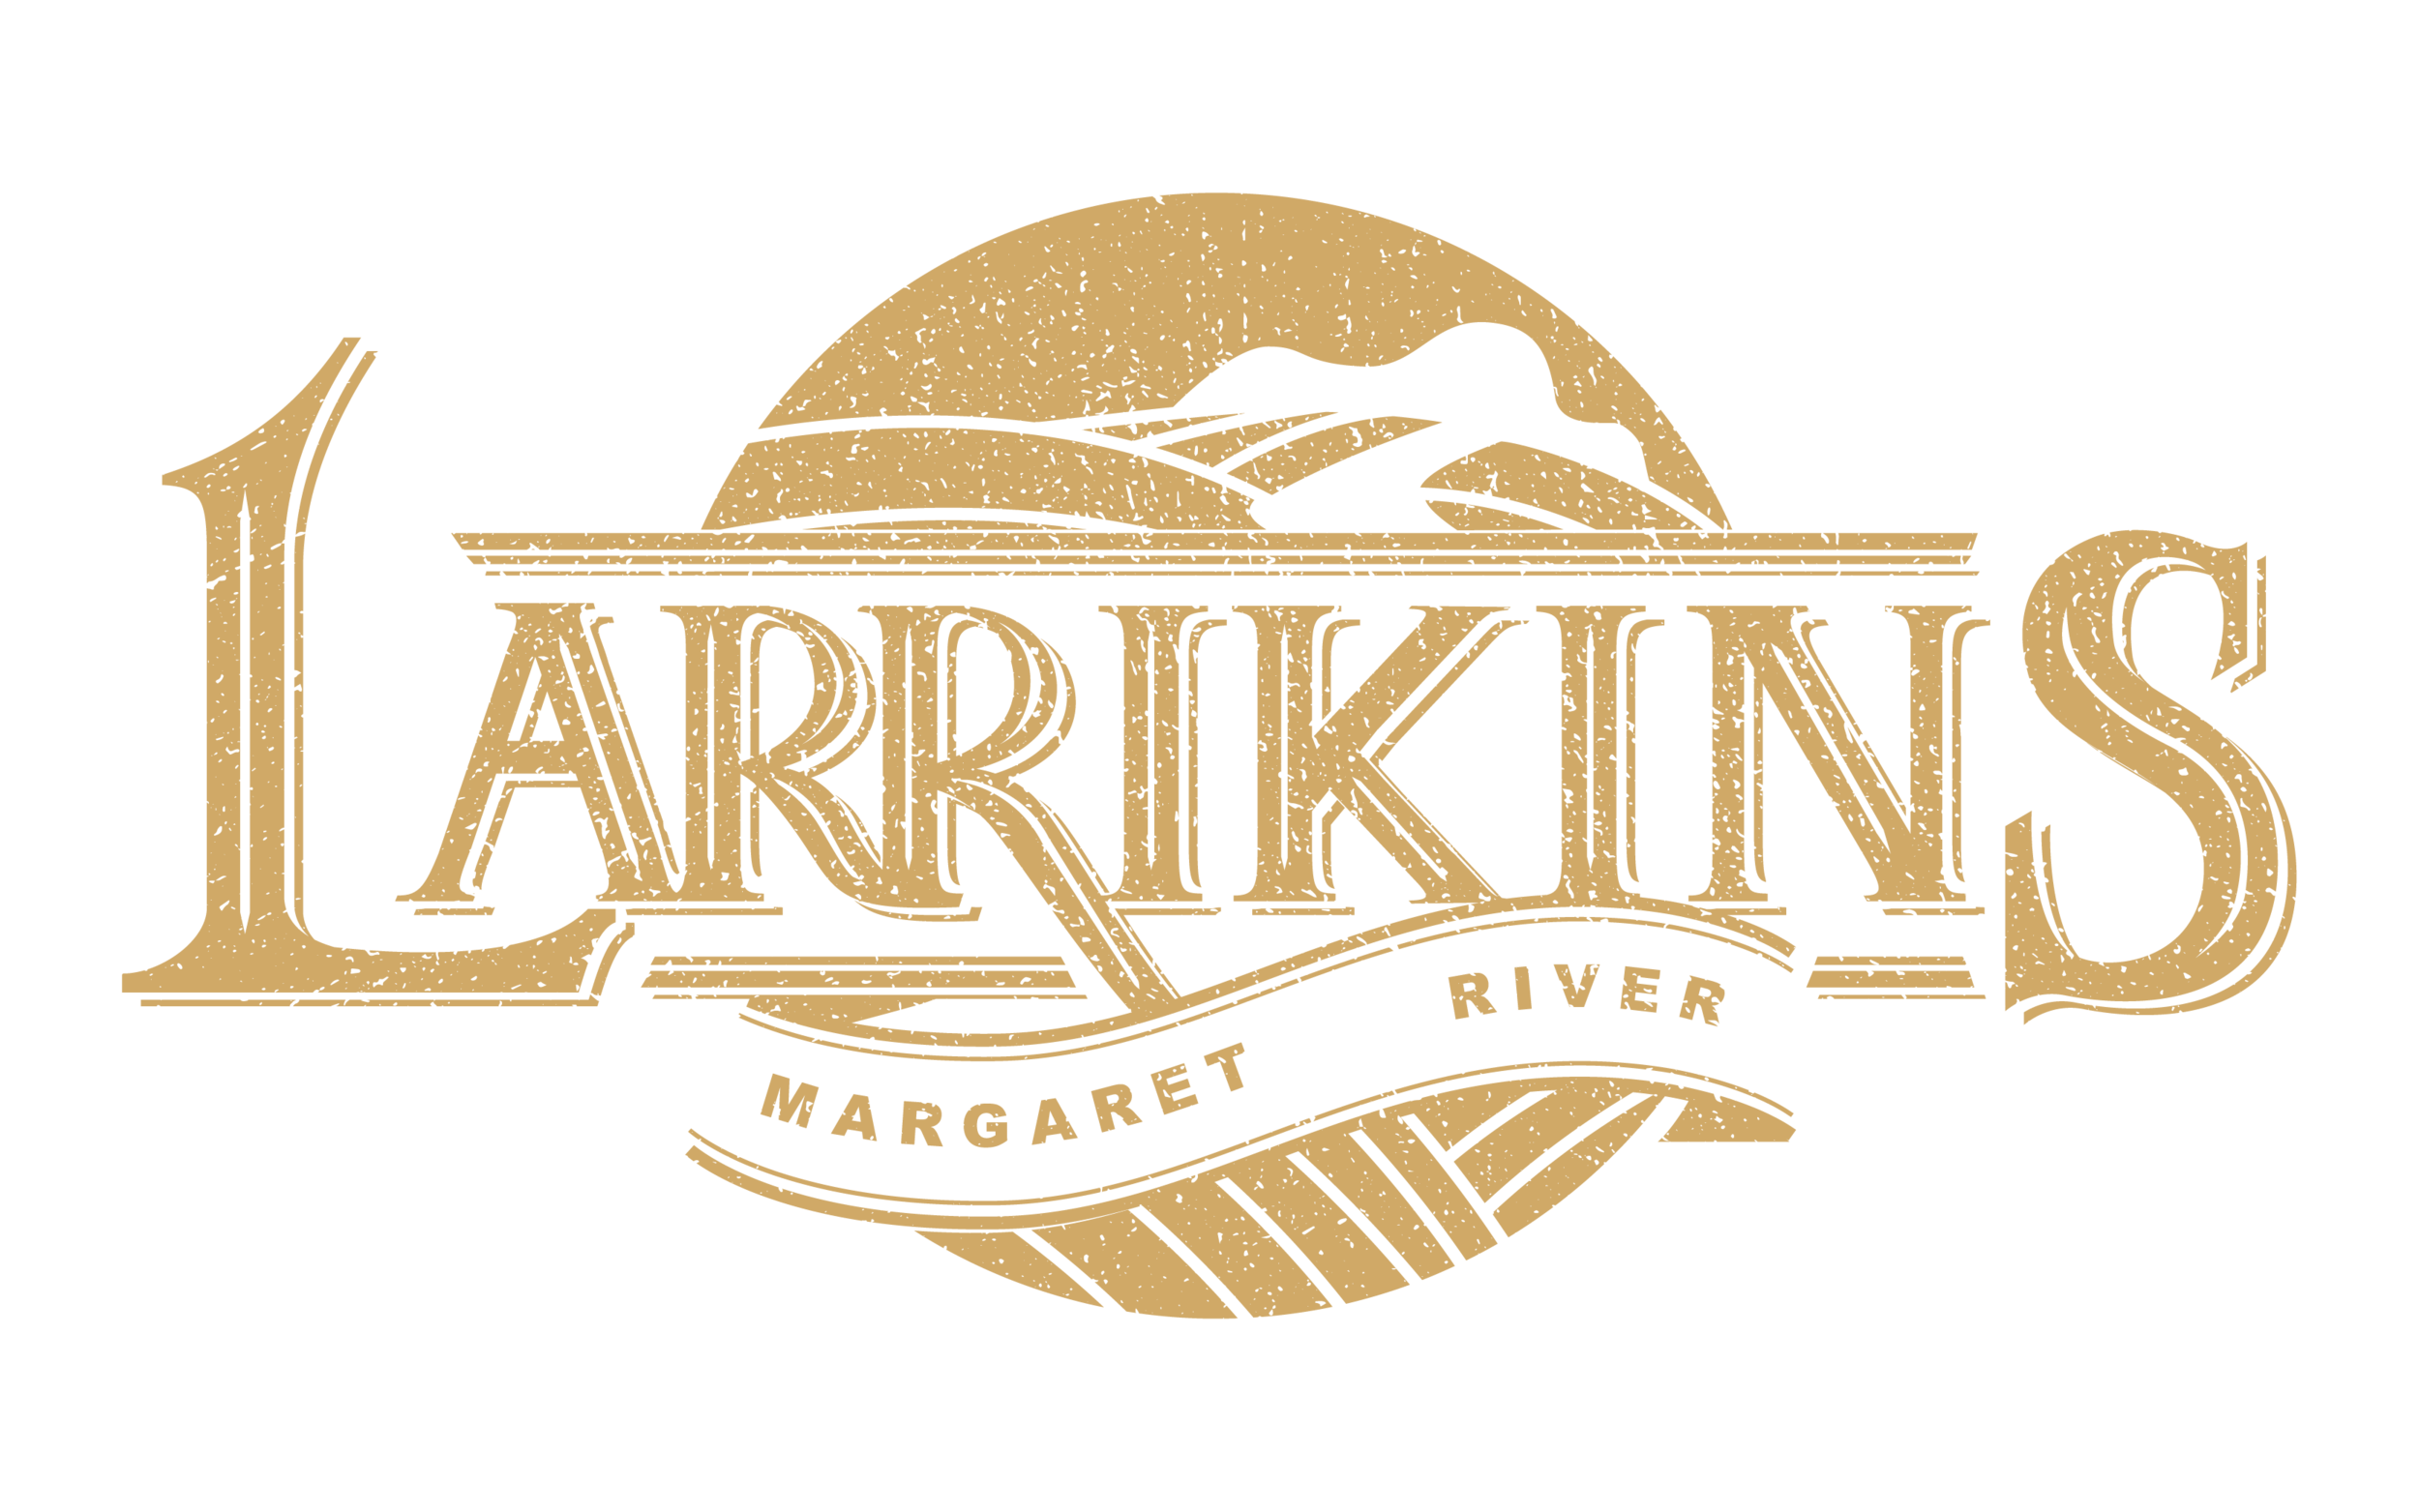 Larrikins of Margaret River